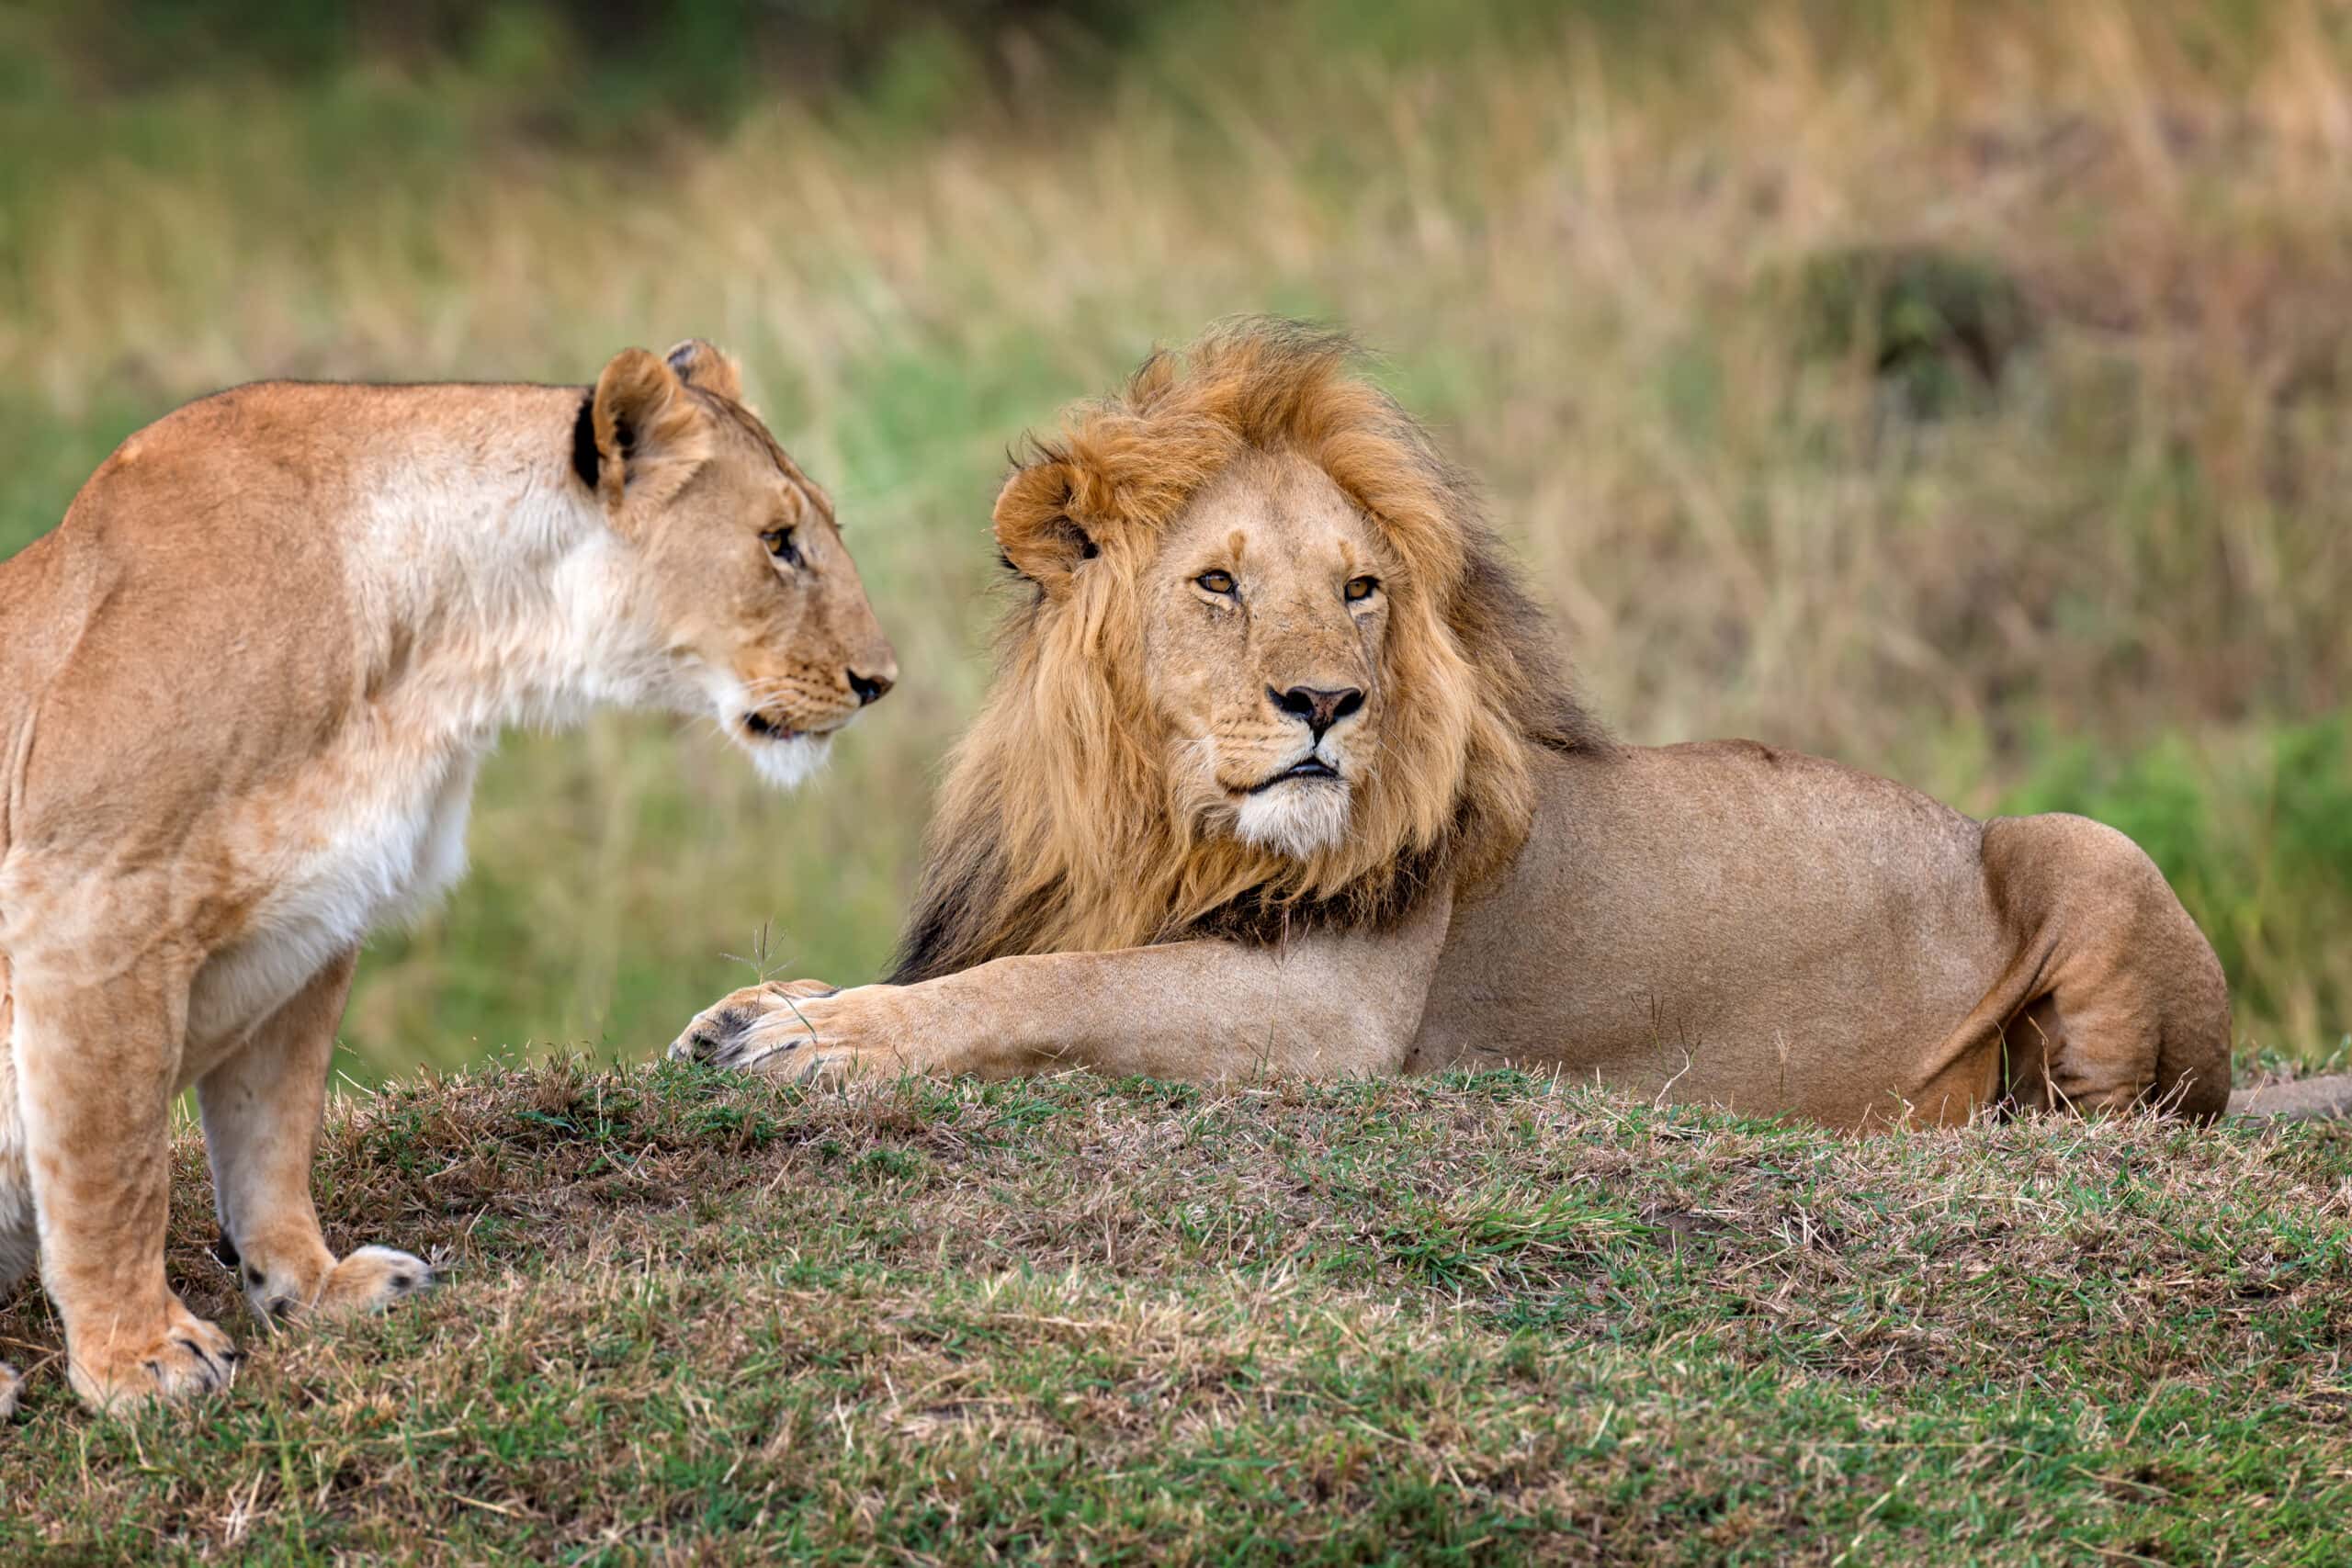 lion in national park of kenya 2021 08 26 15 55 56 utc scaled